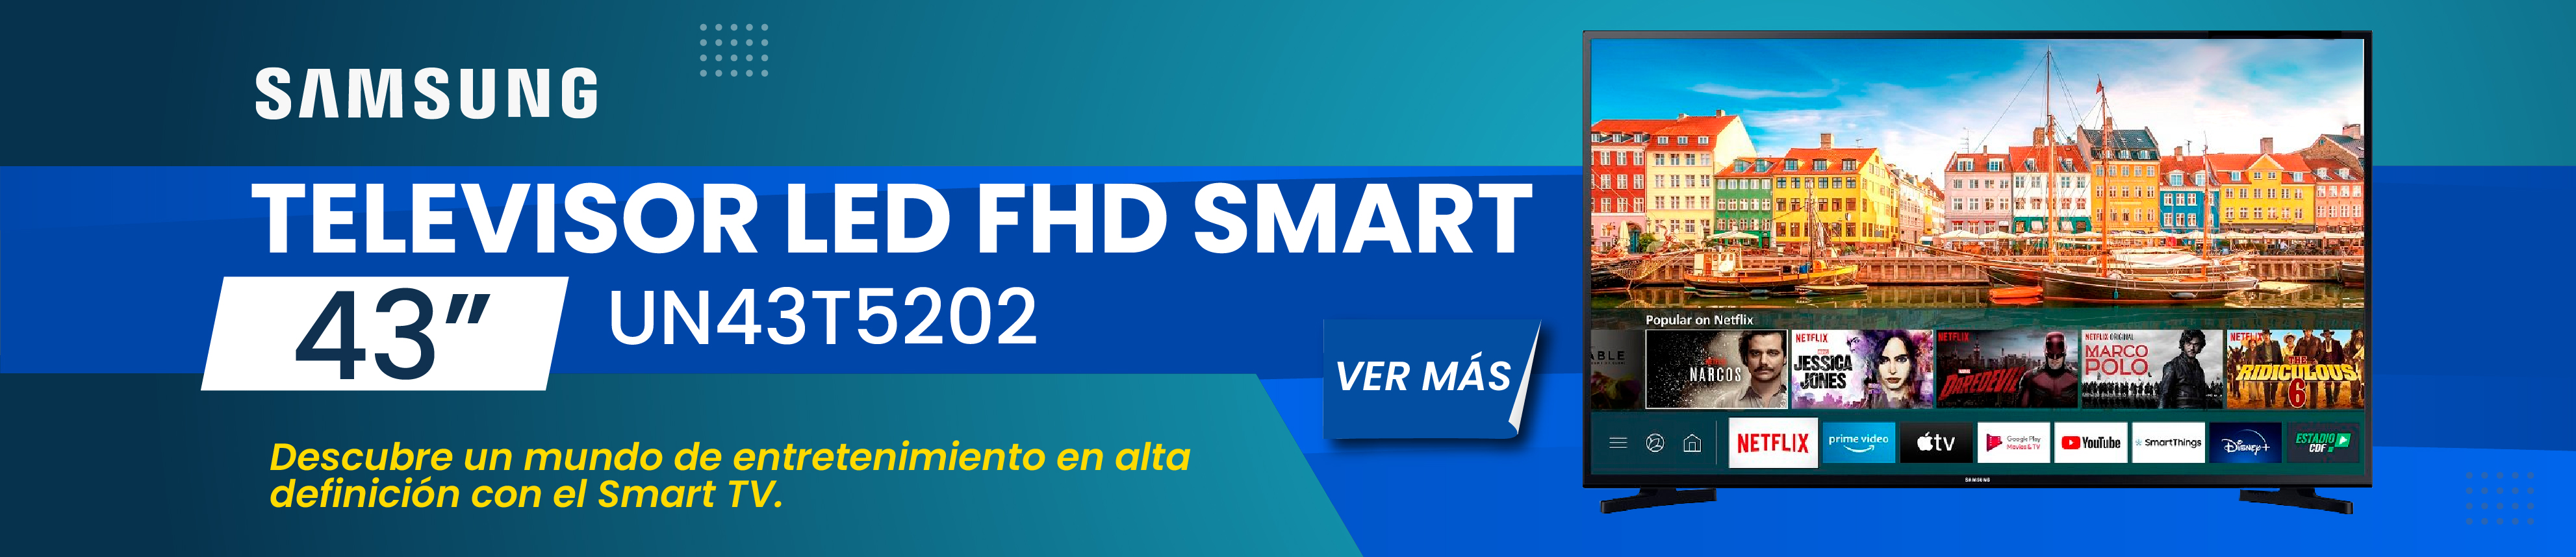 TV Samsung LED FHD Smart 43" UN43T5202